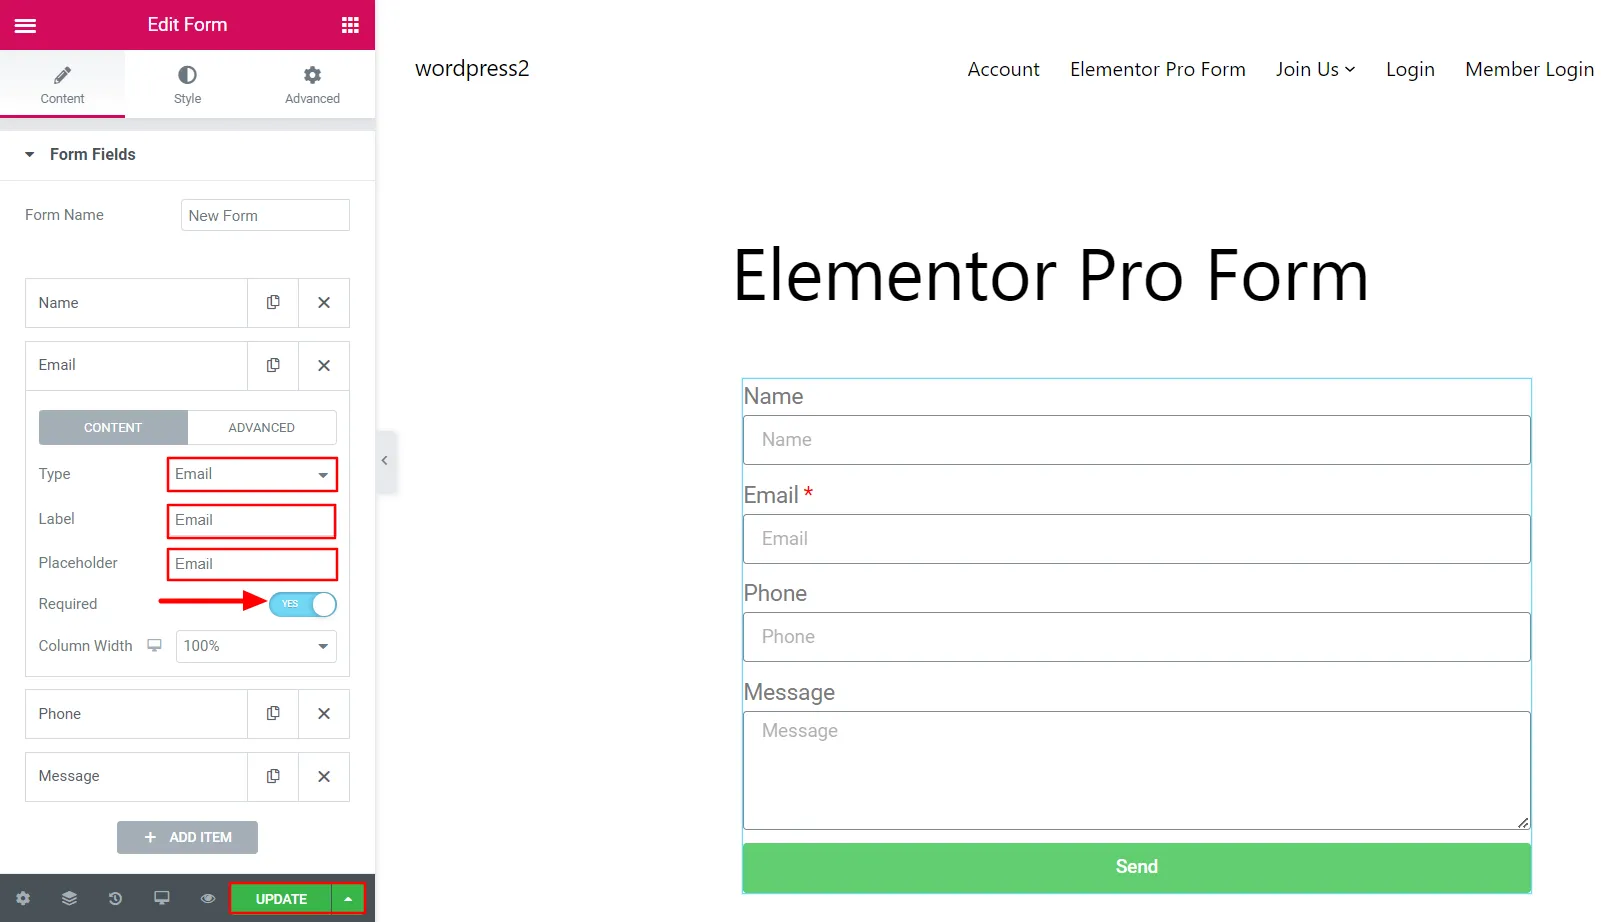 Elementor Pro Form - click Update button